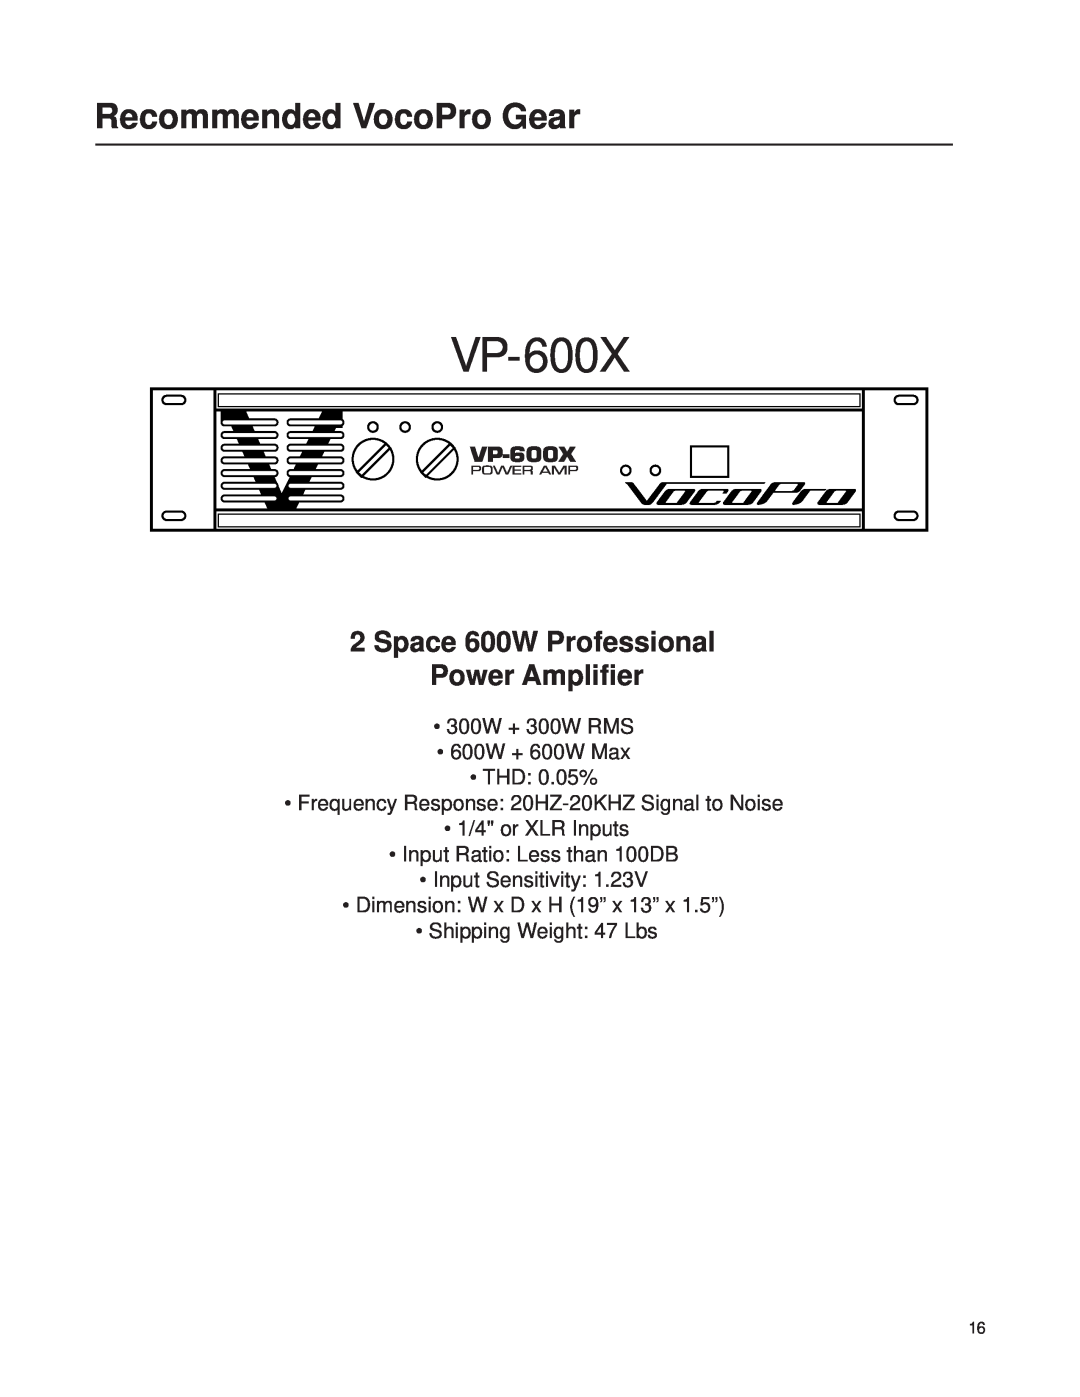 VocoPro Cassette Deck owner manual VP-600X, Recommended VocoPro Gear, Space 600W Professional Power Amplifier 